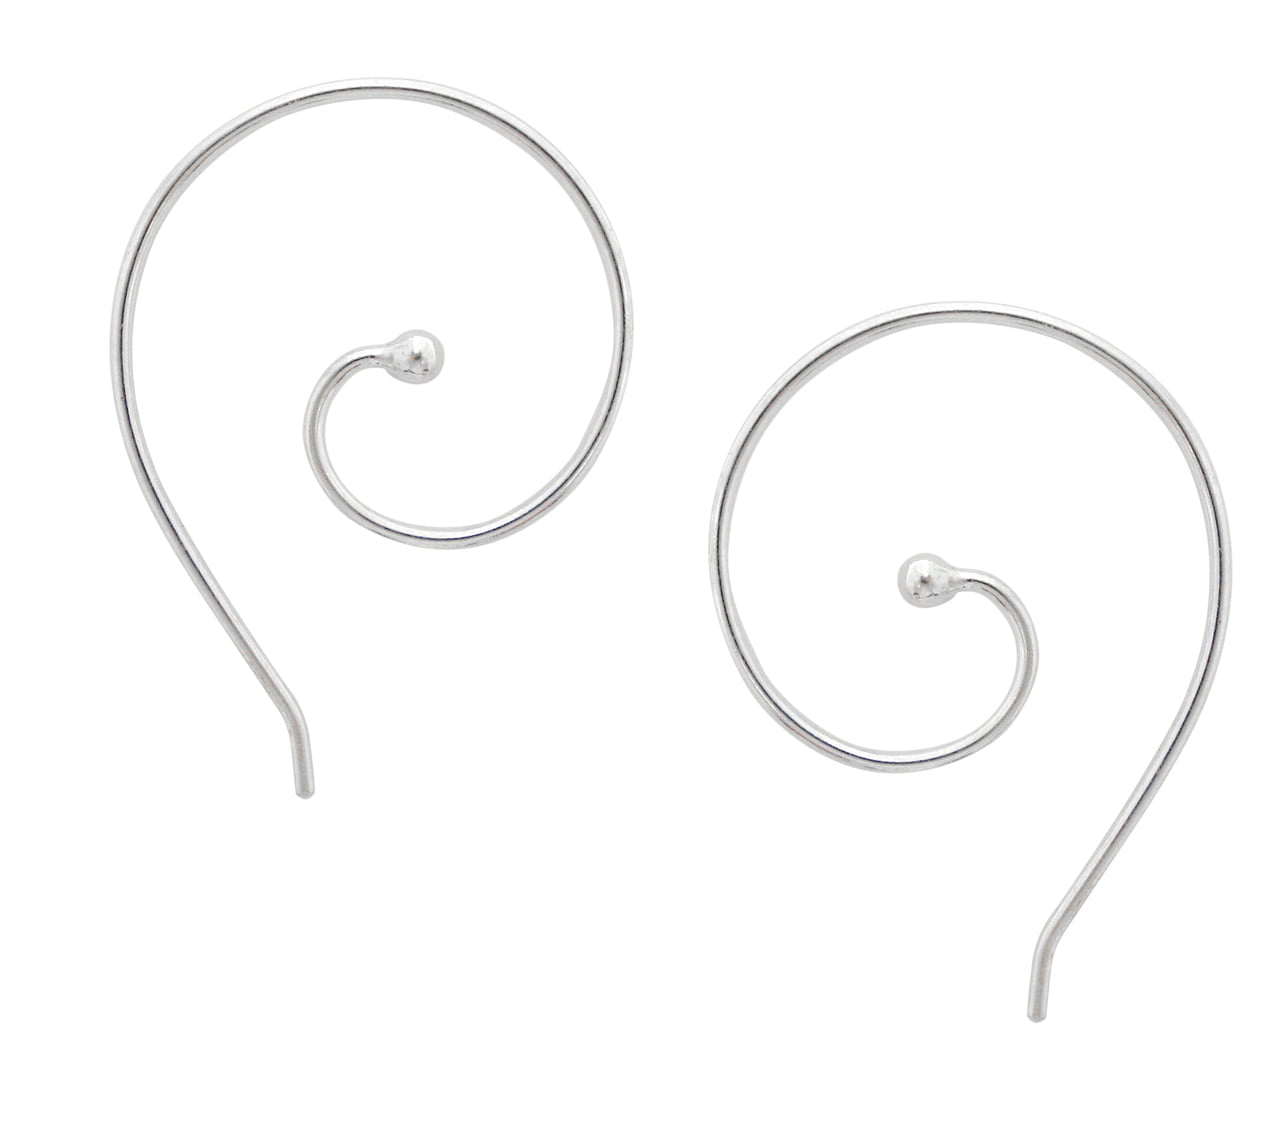 Viona pull through earrings - Earrings - BY GABAY